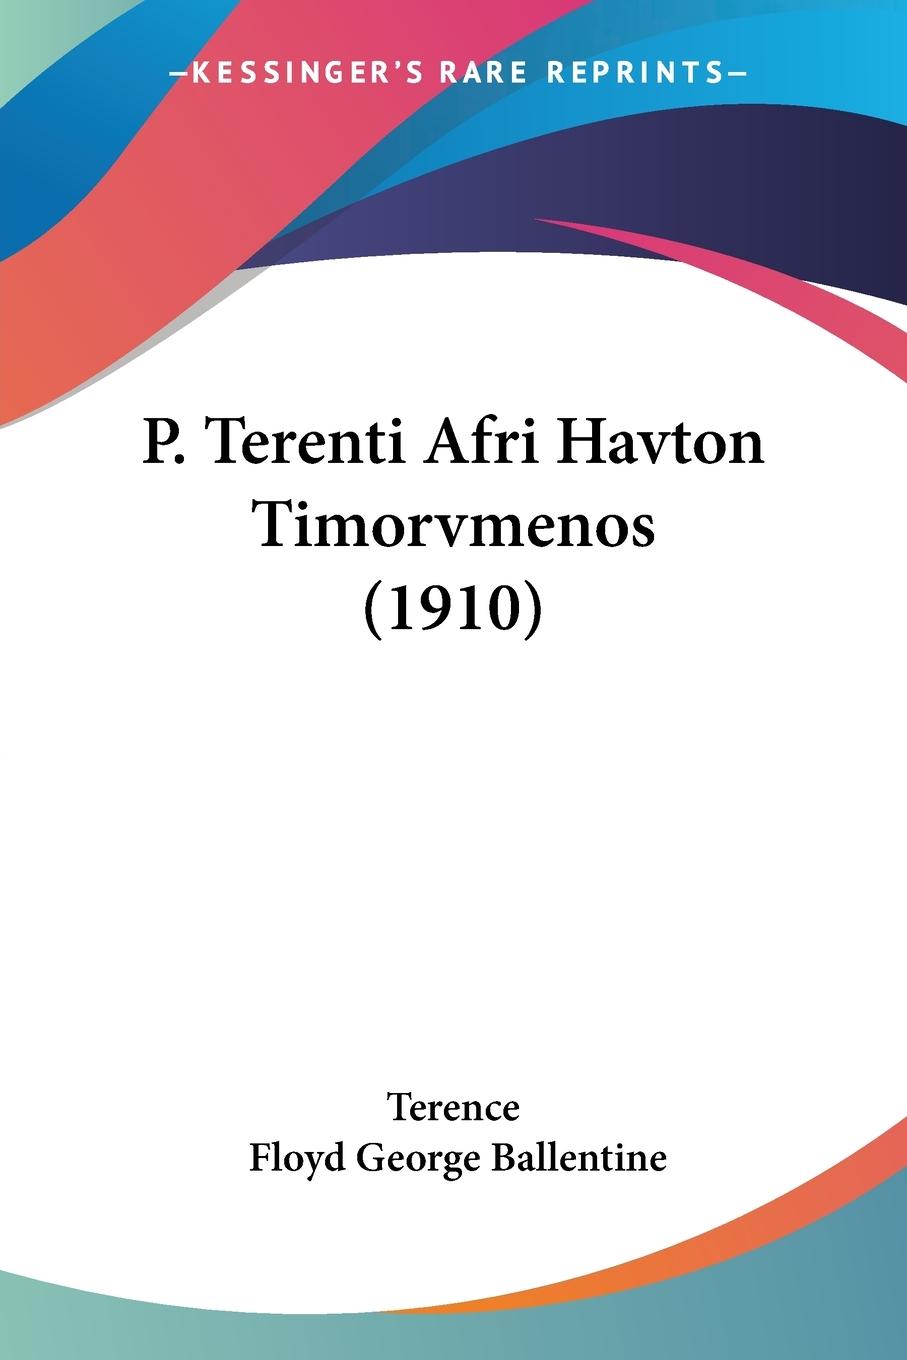 P. Terenti Afri Havton Timorvmenos (1910) - Terence